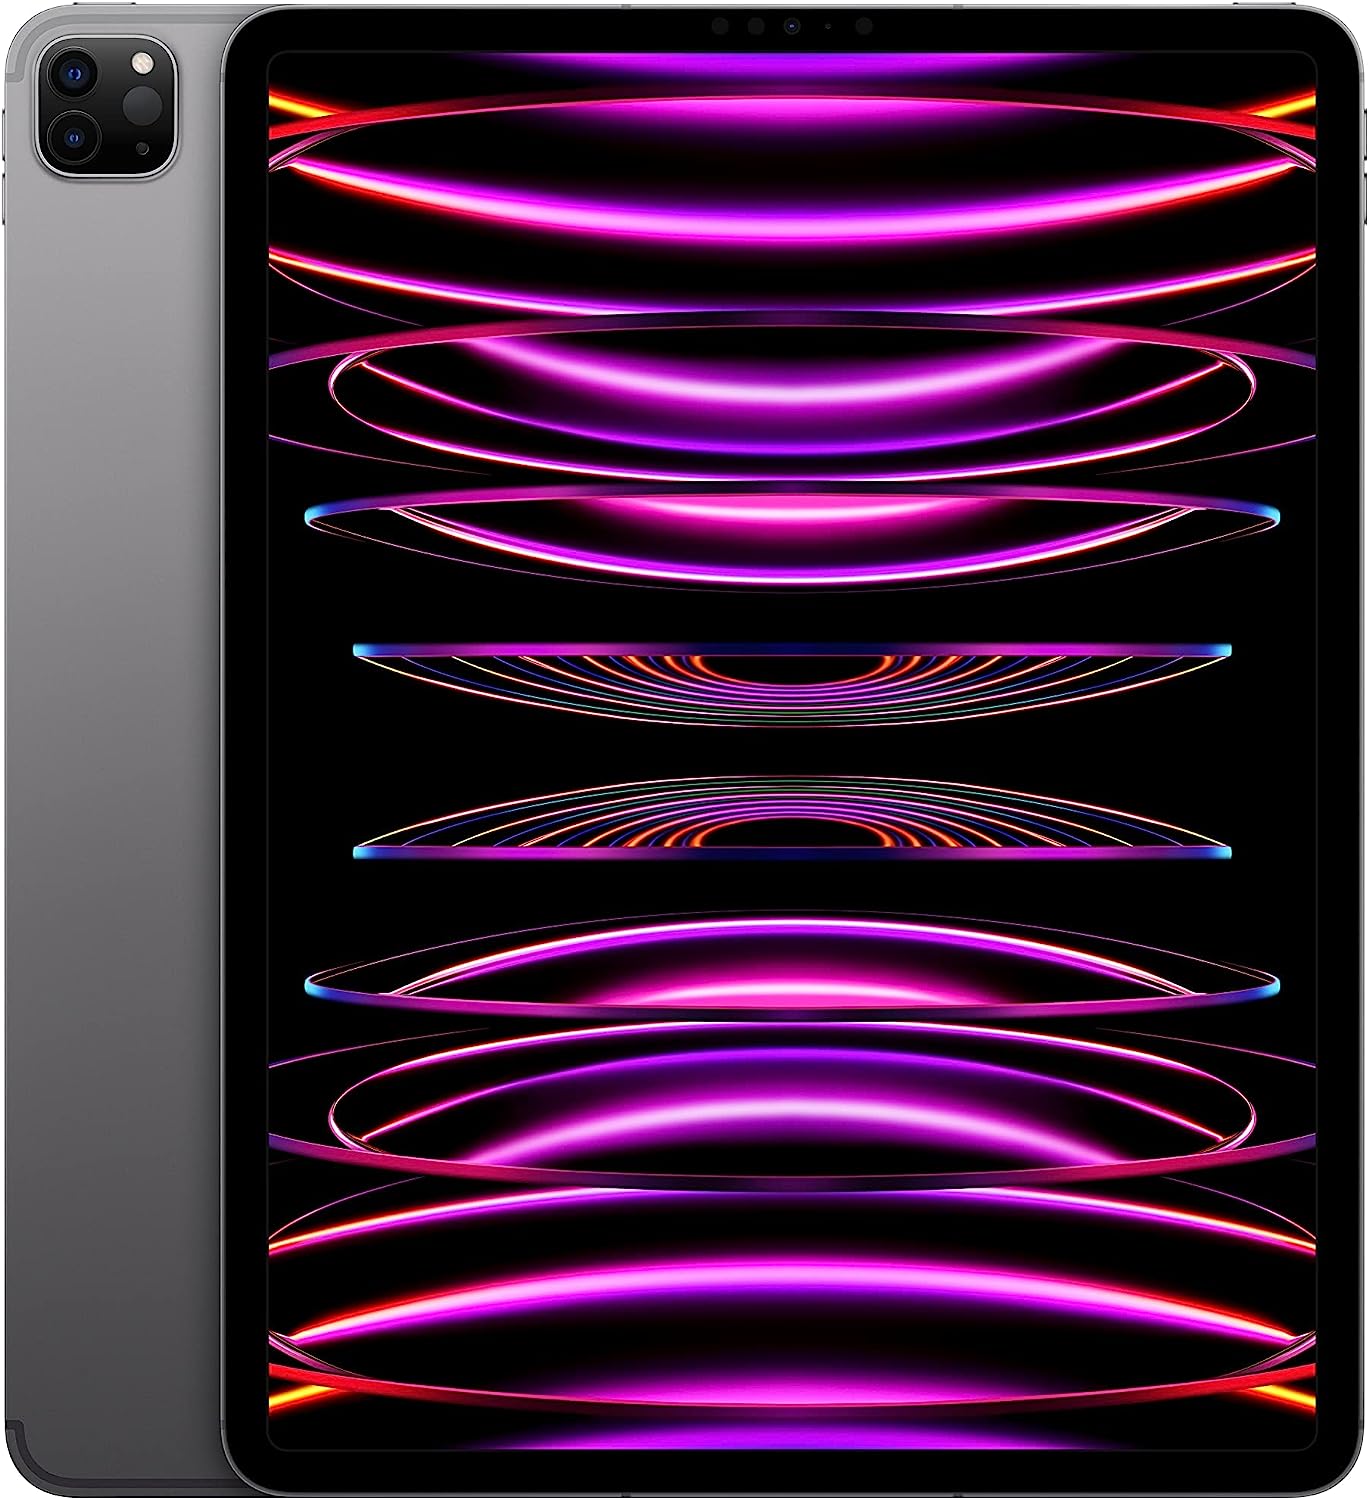 Apple iPad Pro 6th Gen 12.9in - 256GB (Wifi + Cellular) - Space Gray (Refurbished)